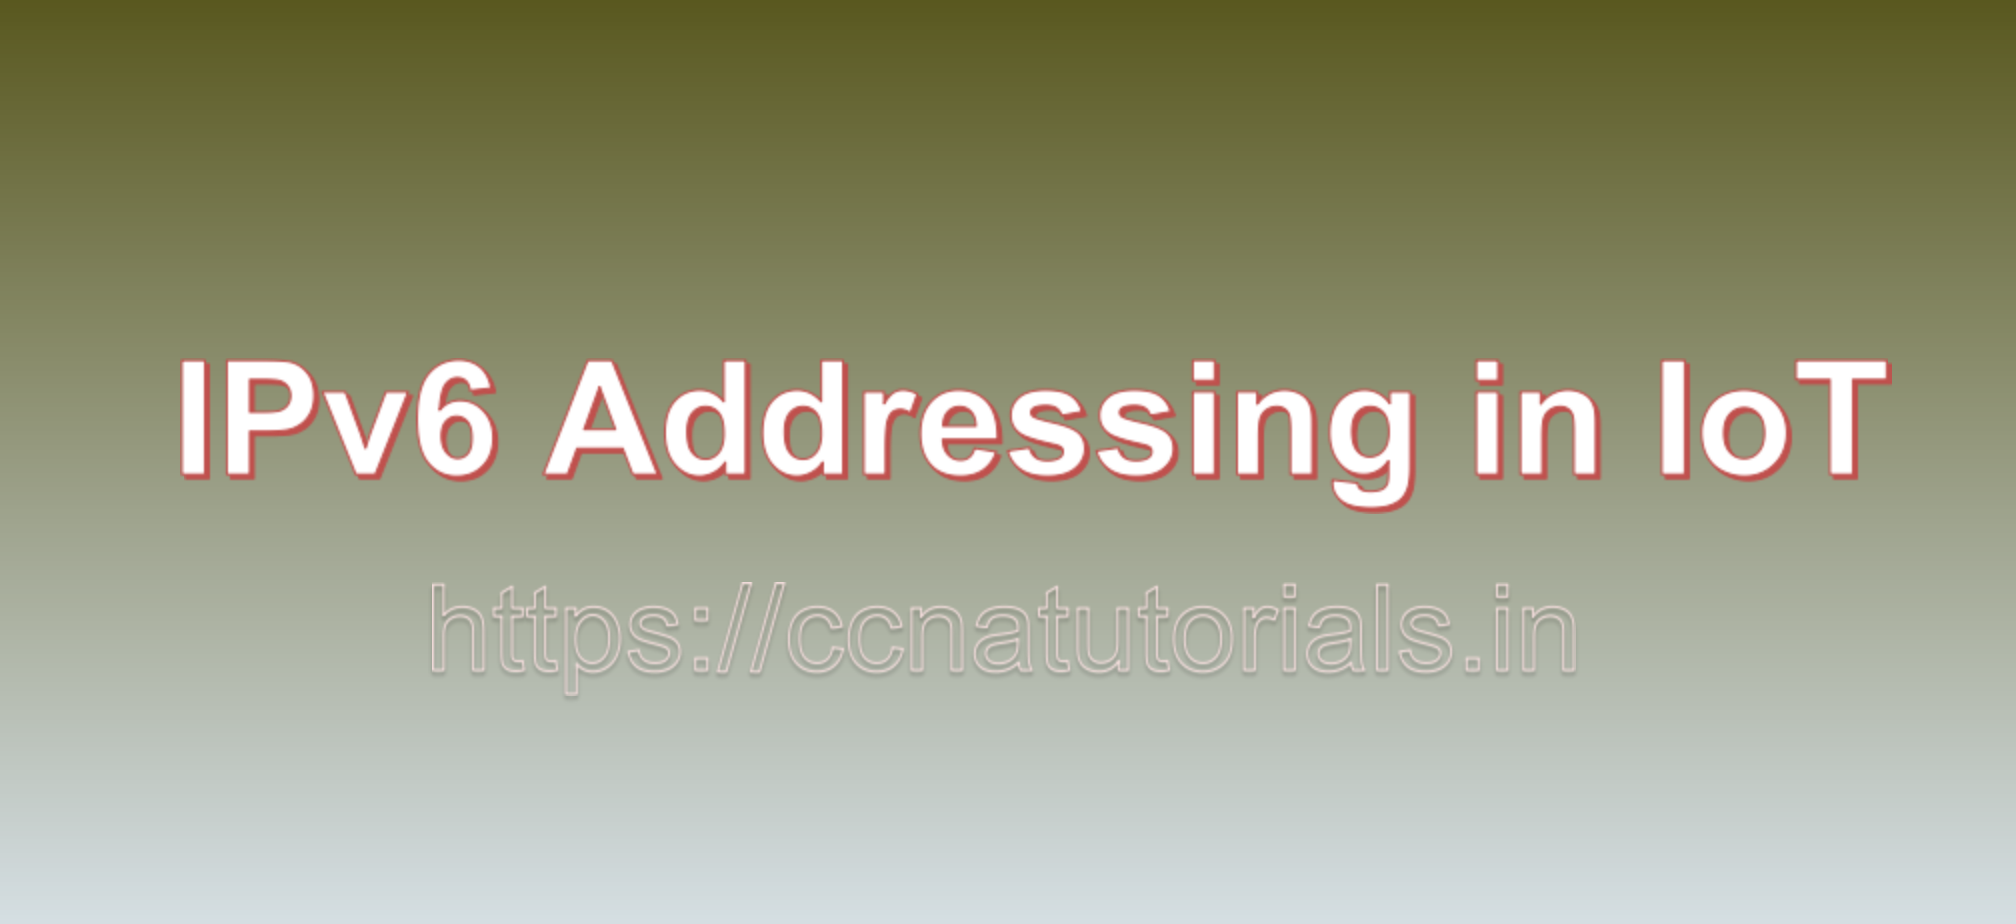 IPv6 Addressing in IoT (Internet of Things), ccna, ccna tutorials